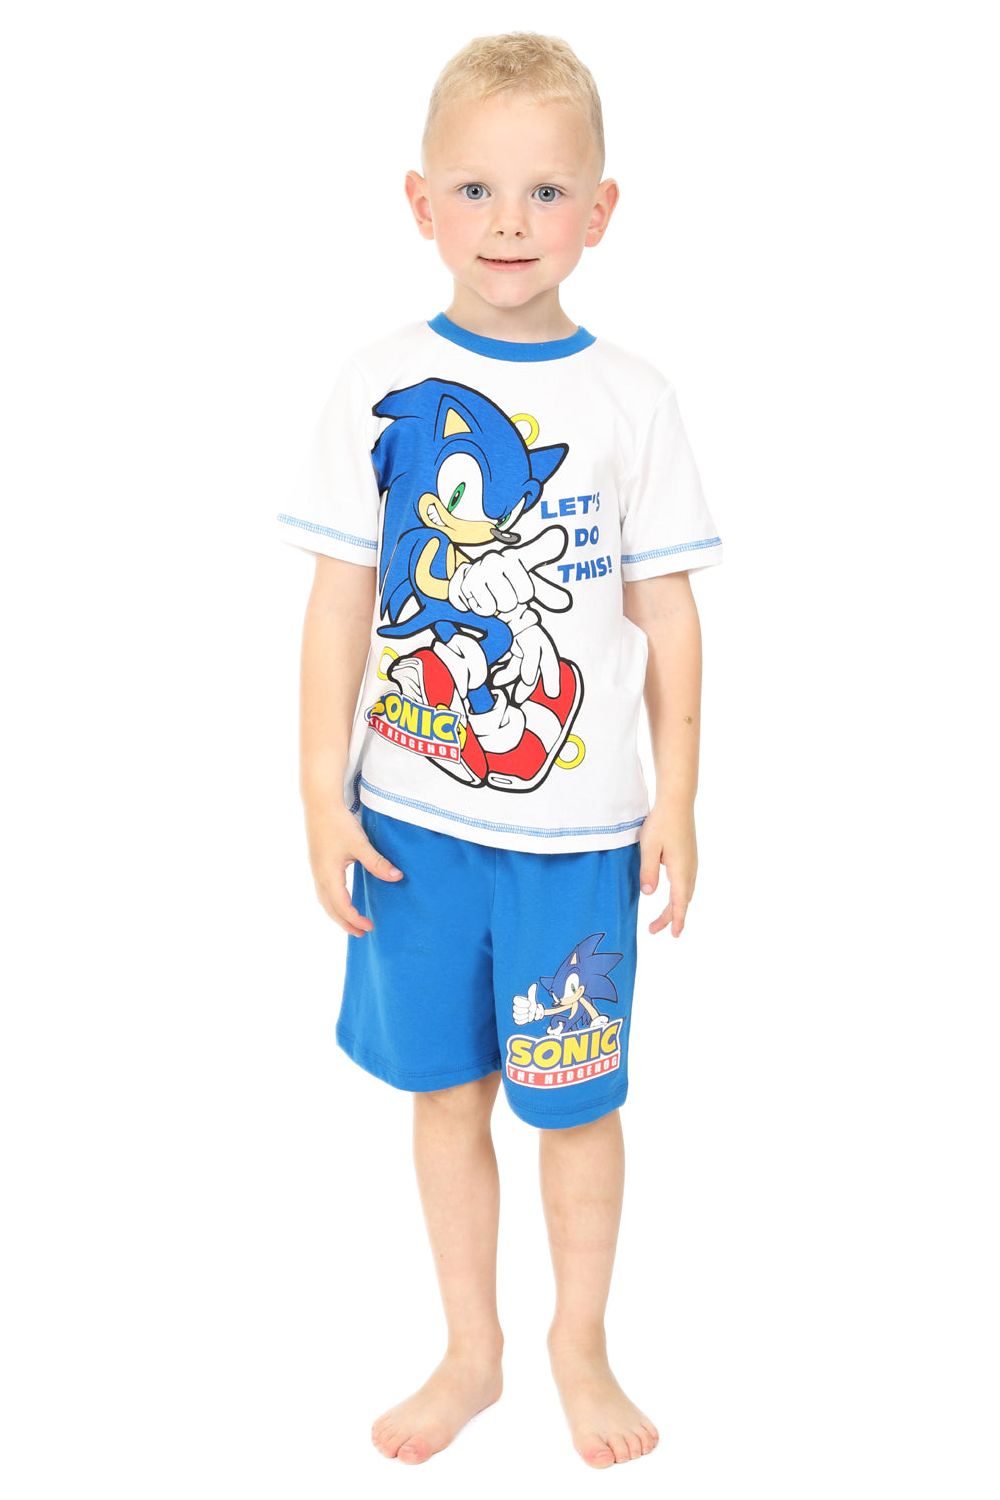 Sonic The Hedgehog Let's Do This Short Gamer Cotton Pyjamas